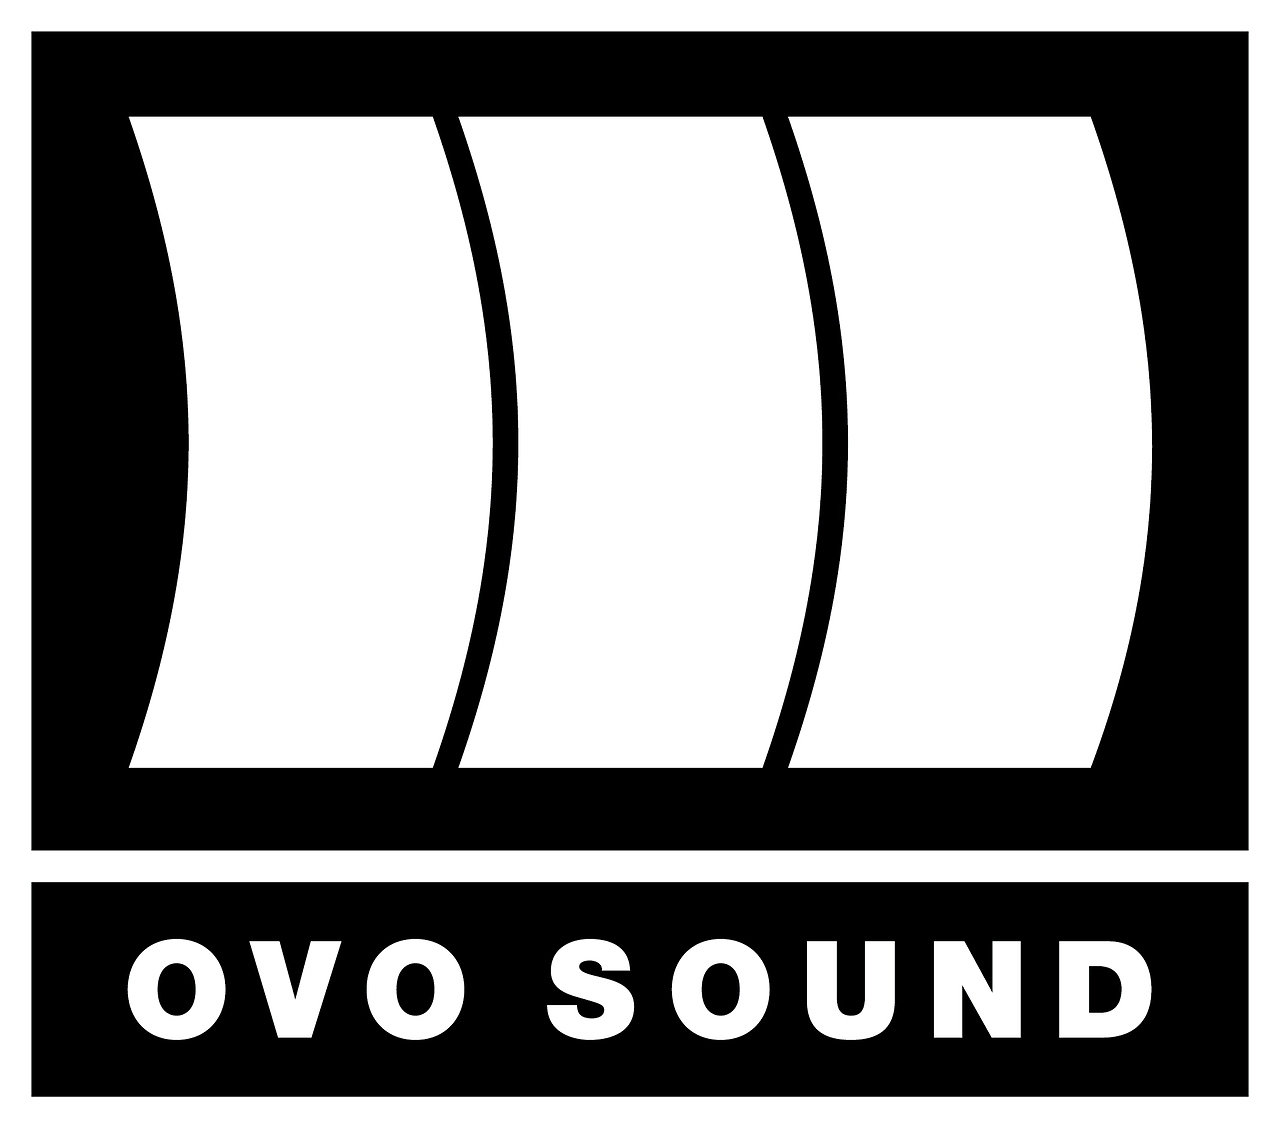 Xo Records Black and White Logo - OVO Sound